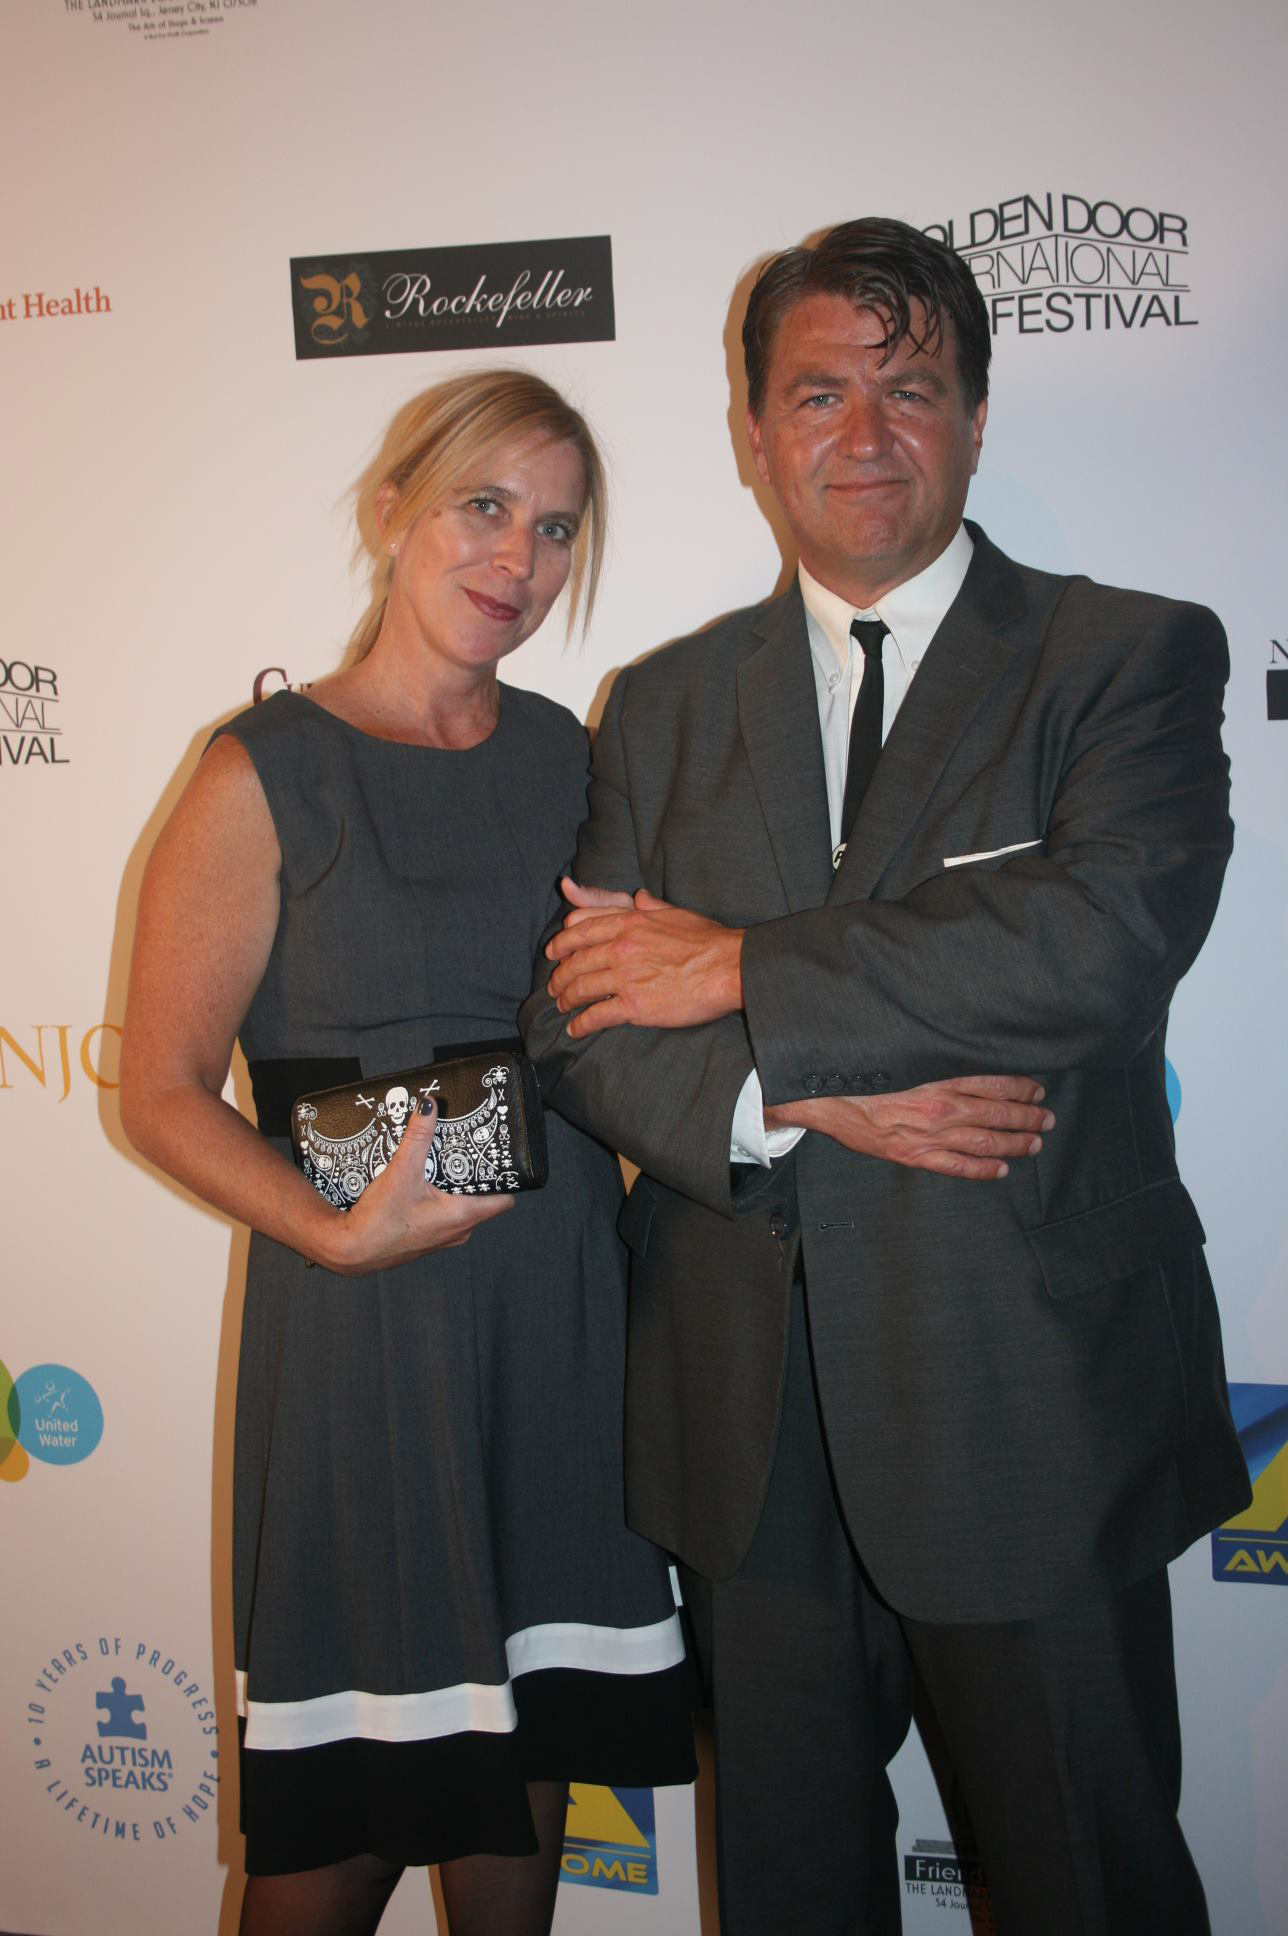 On the red carpet at the Golden Door International Film Festival, with Leann van der Heyden.